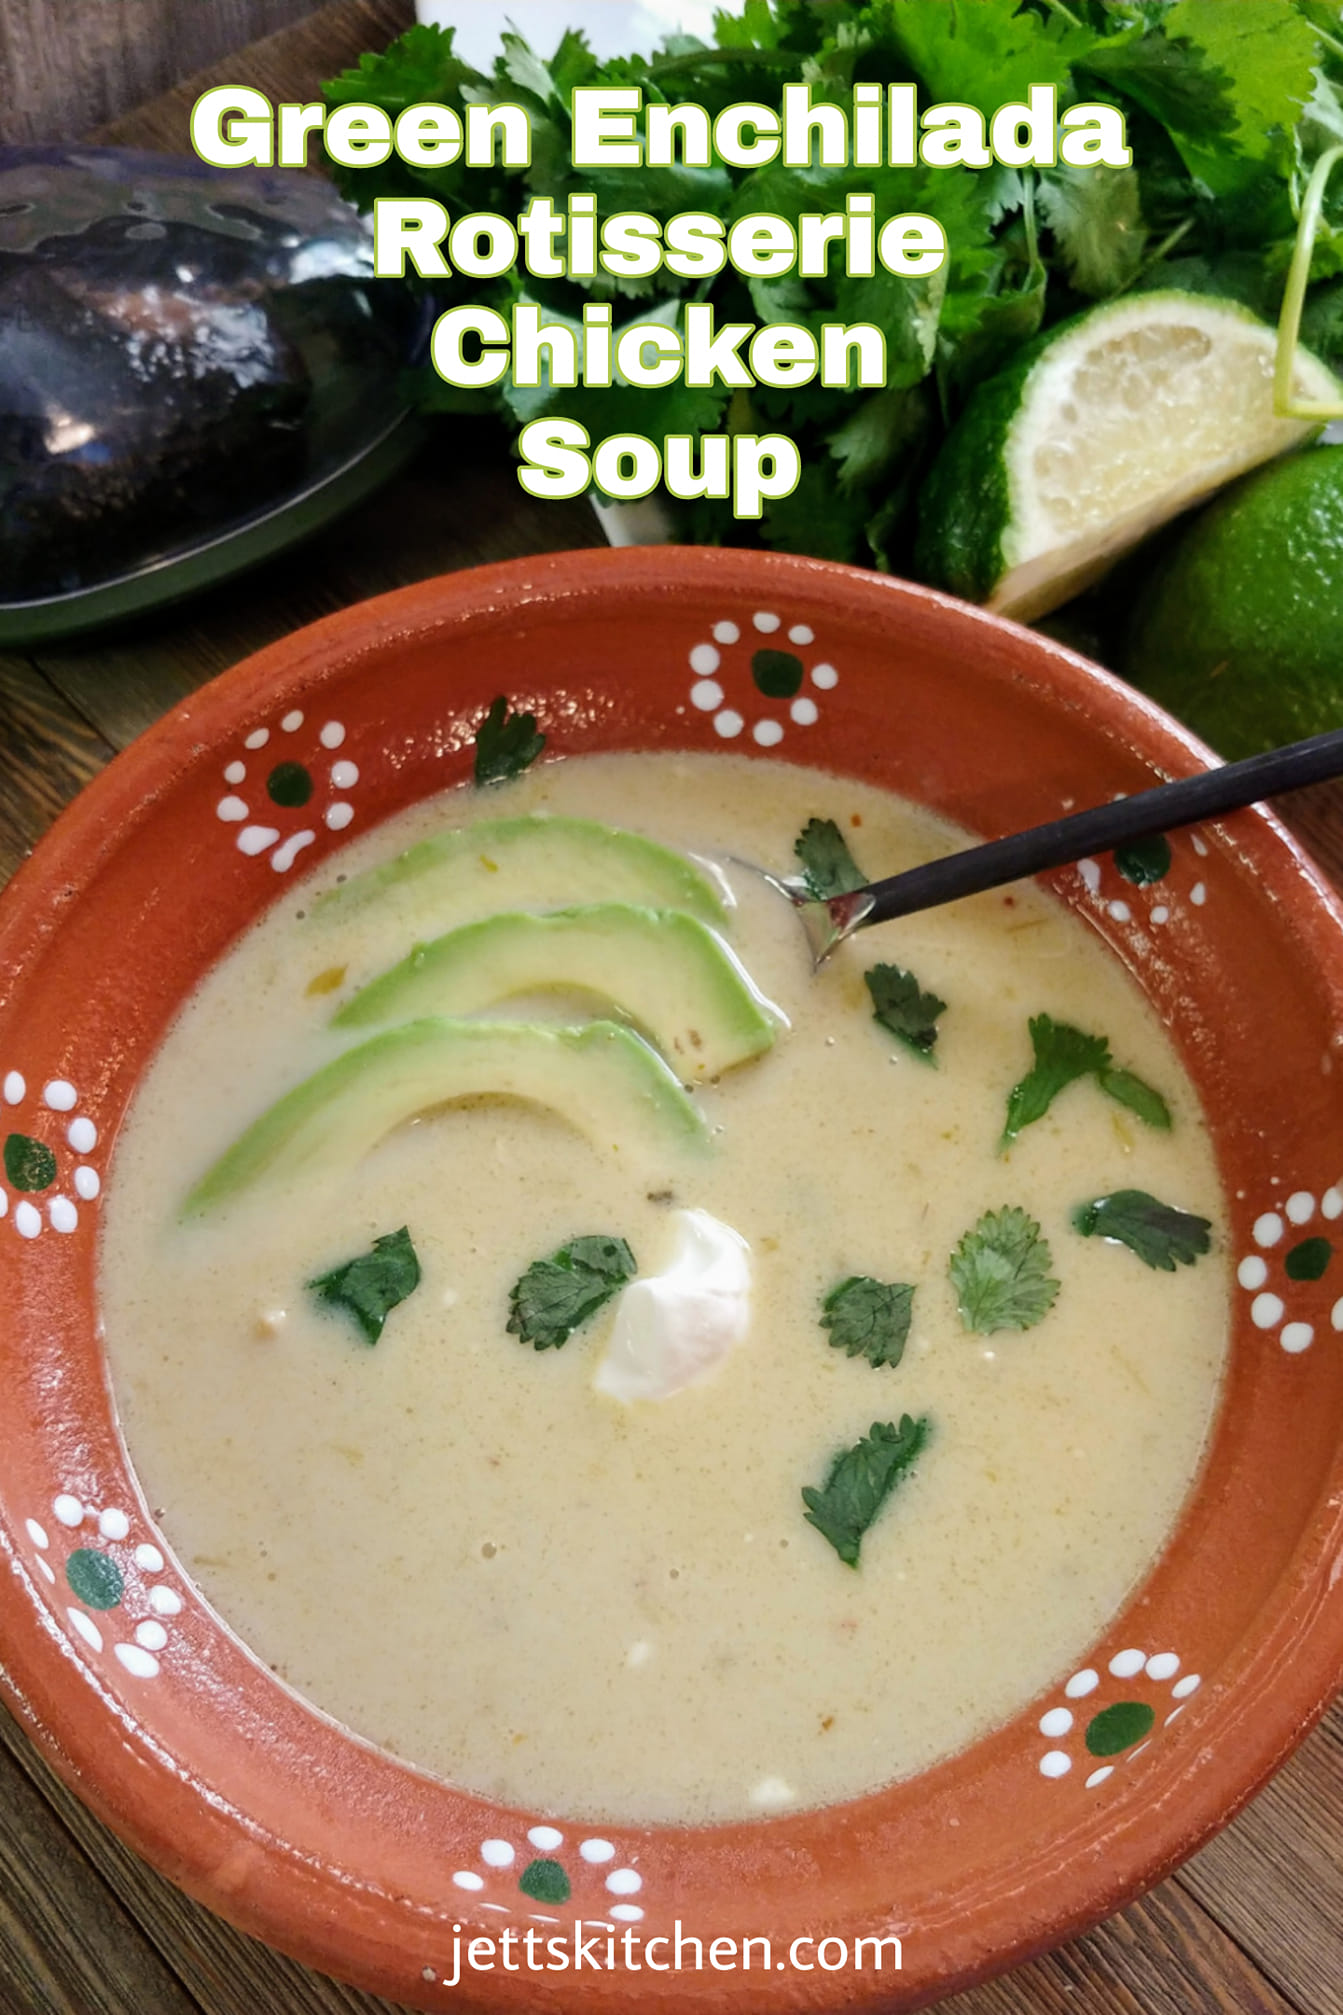 https://jettskitchen.com/wp-content/uploads/2021/10/Green-Enchilada-rotisserie-chicken-soup-recipe.jpg